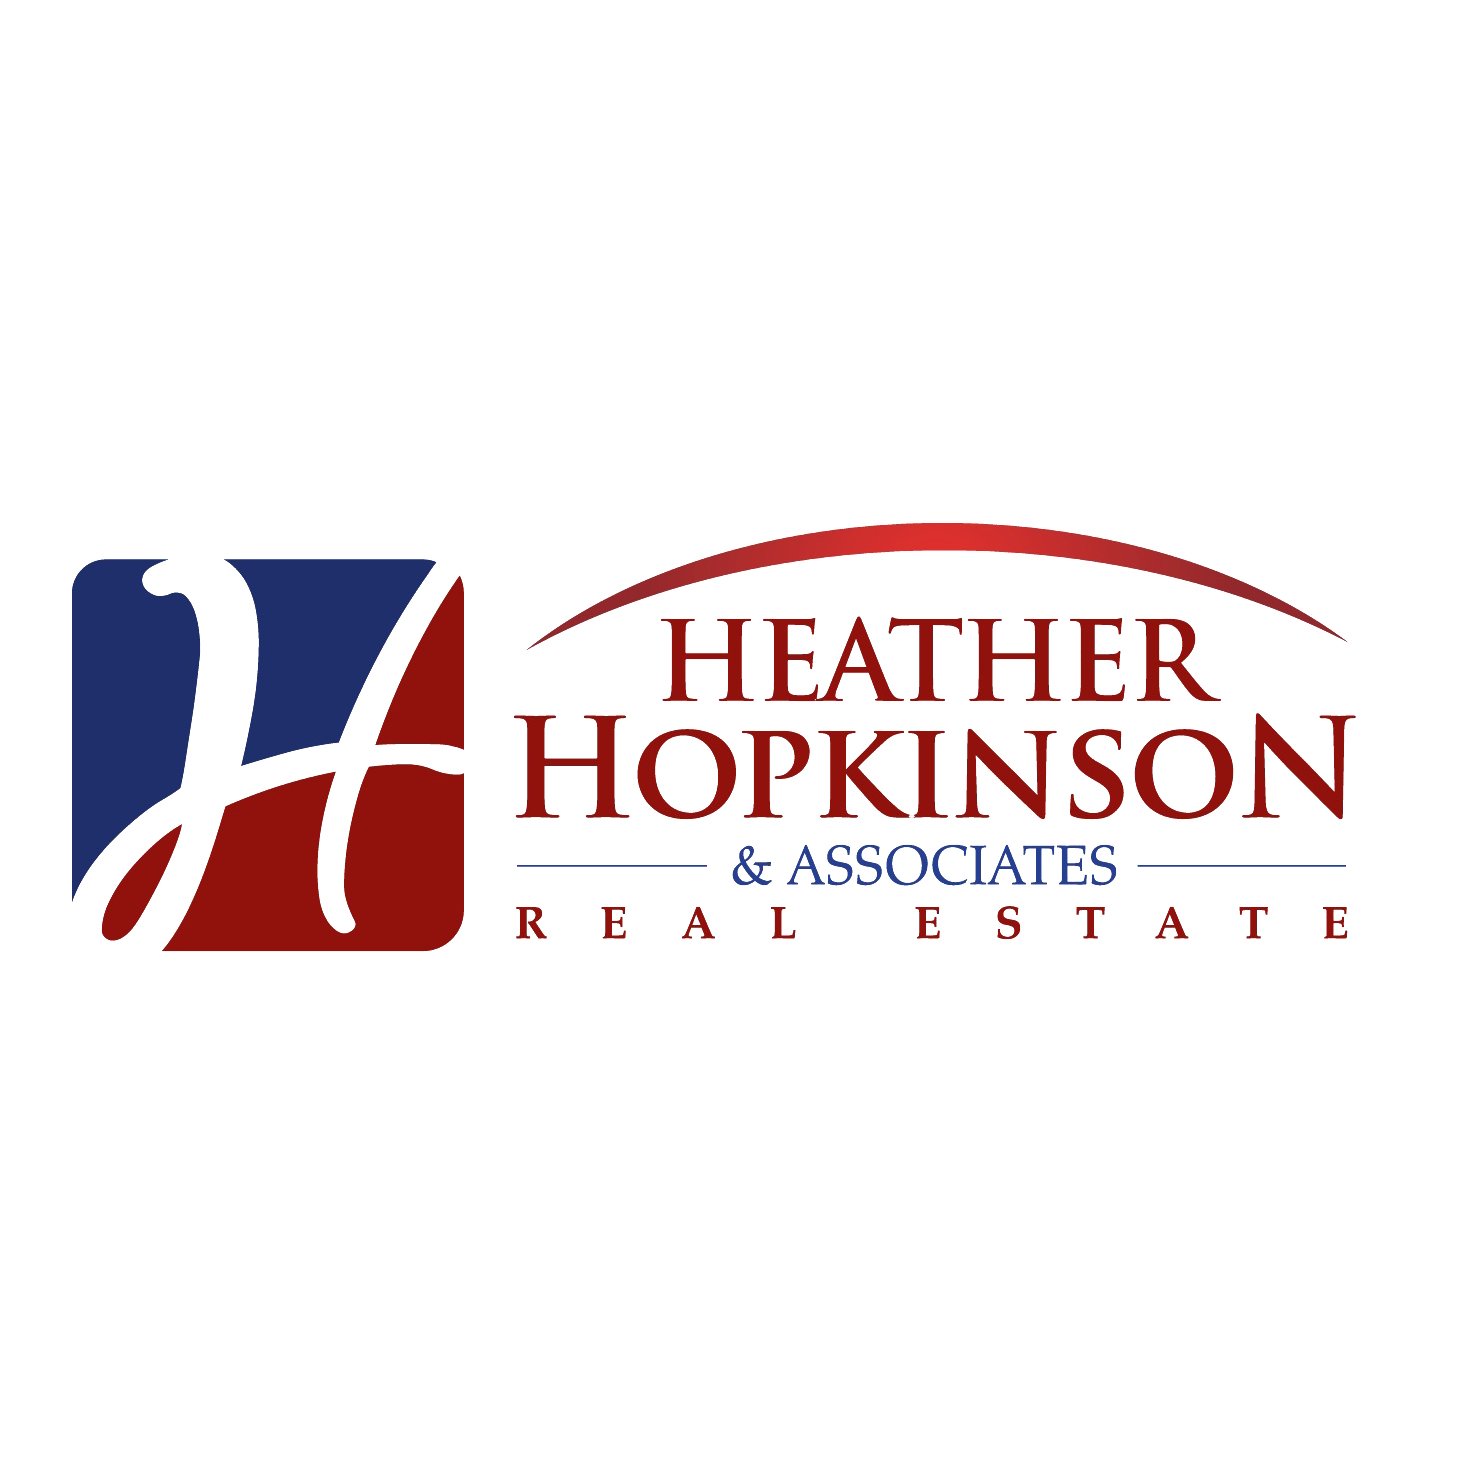 Heather Hopkinson & Associates